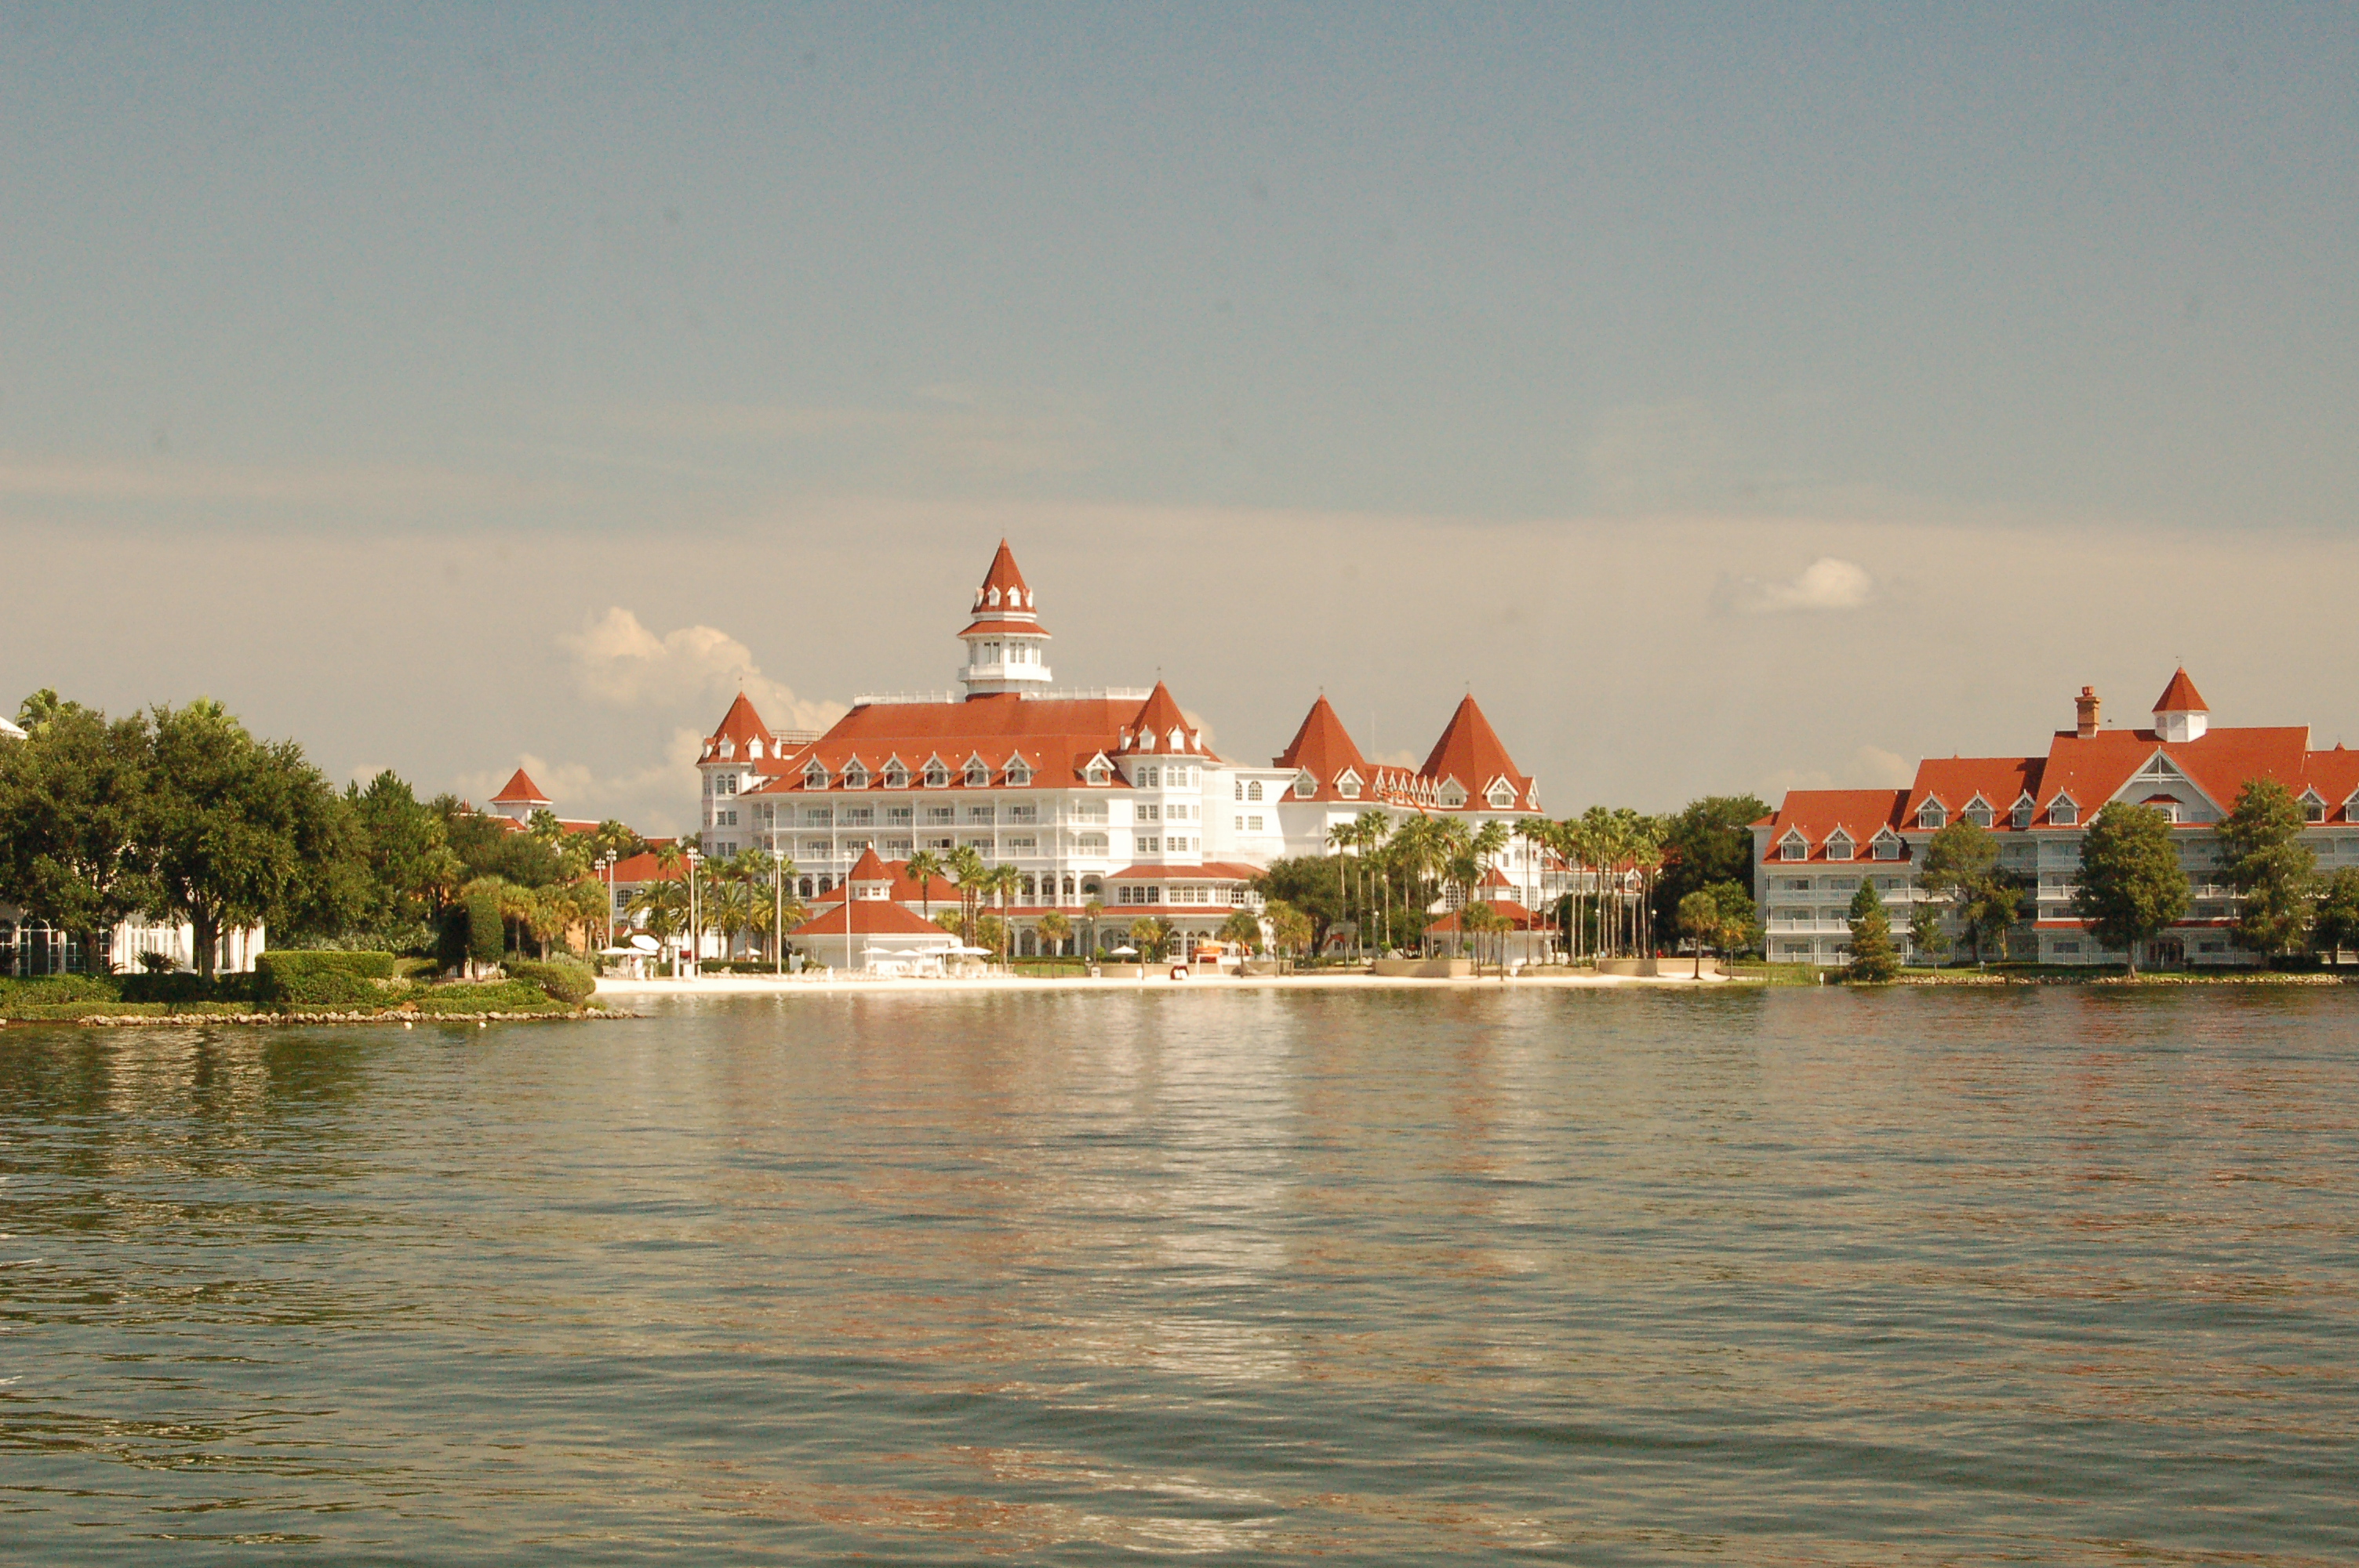 Disney's Grand Floridian Resort & Spa - Wikipedia